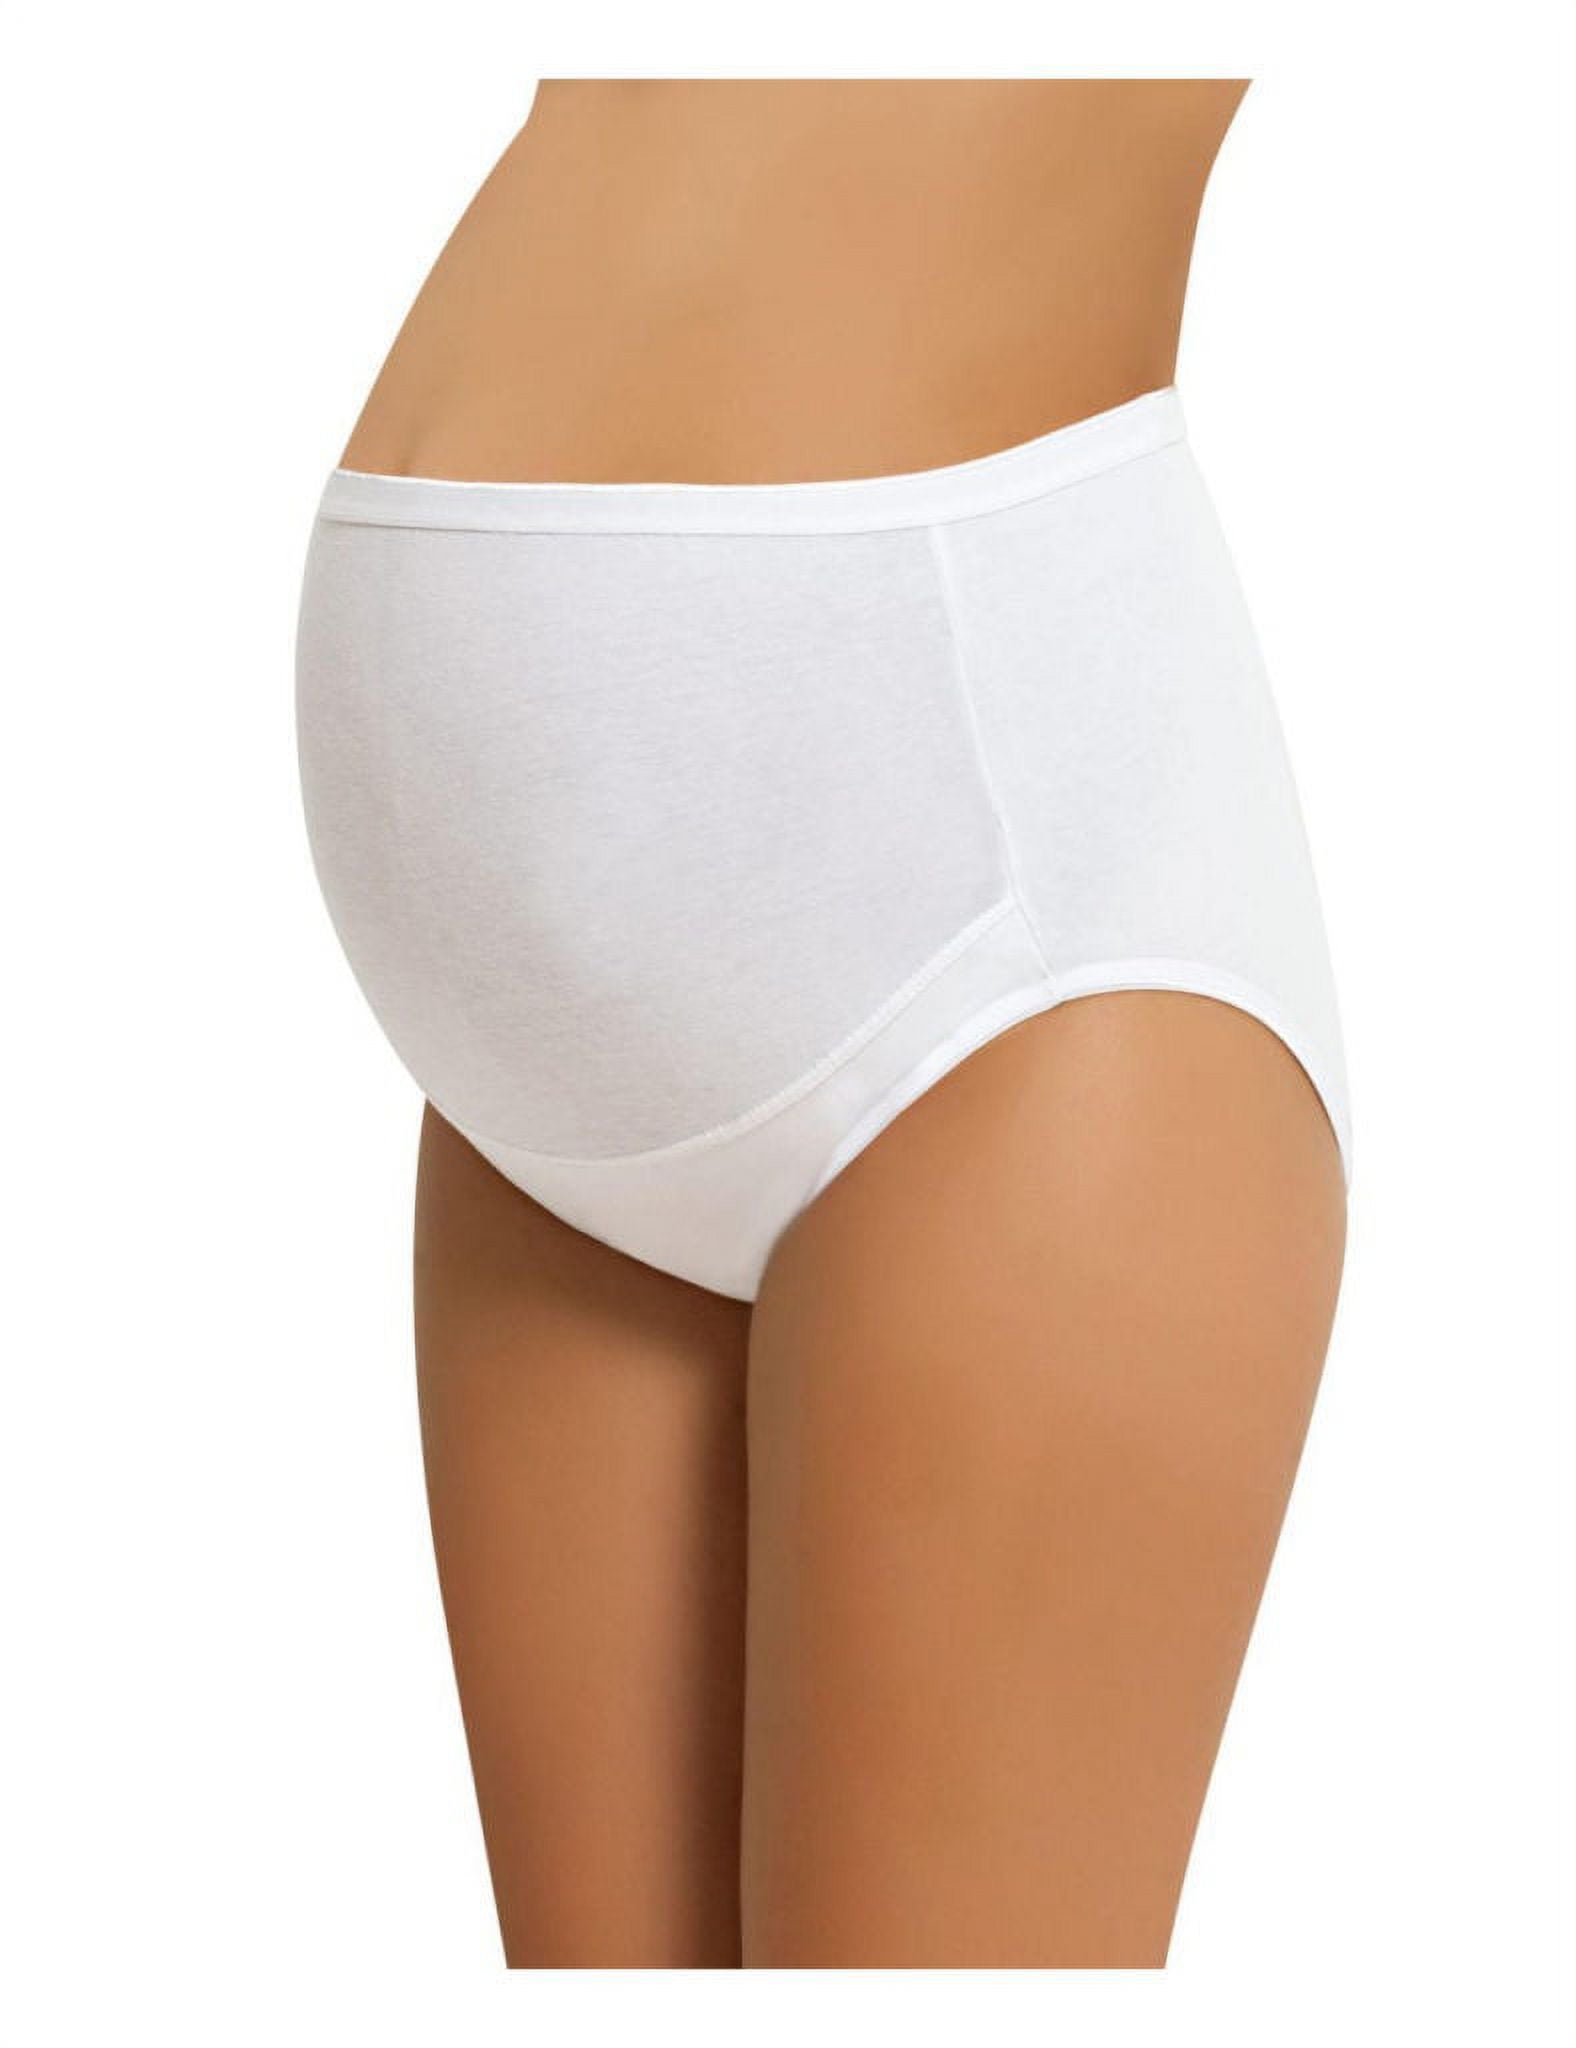 NBB Women's Adjustable Maternity high cut 100% Cotton underwear